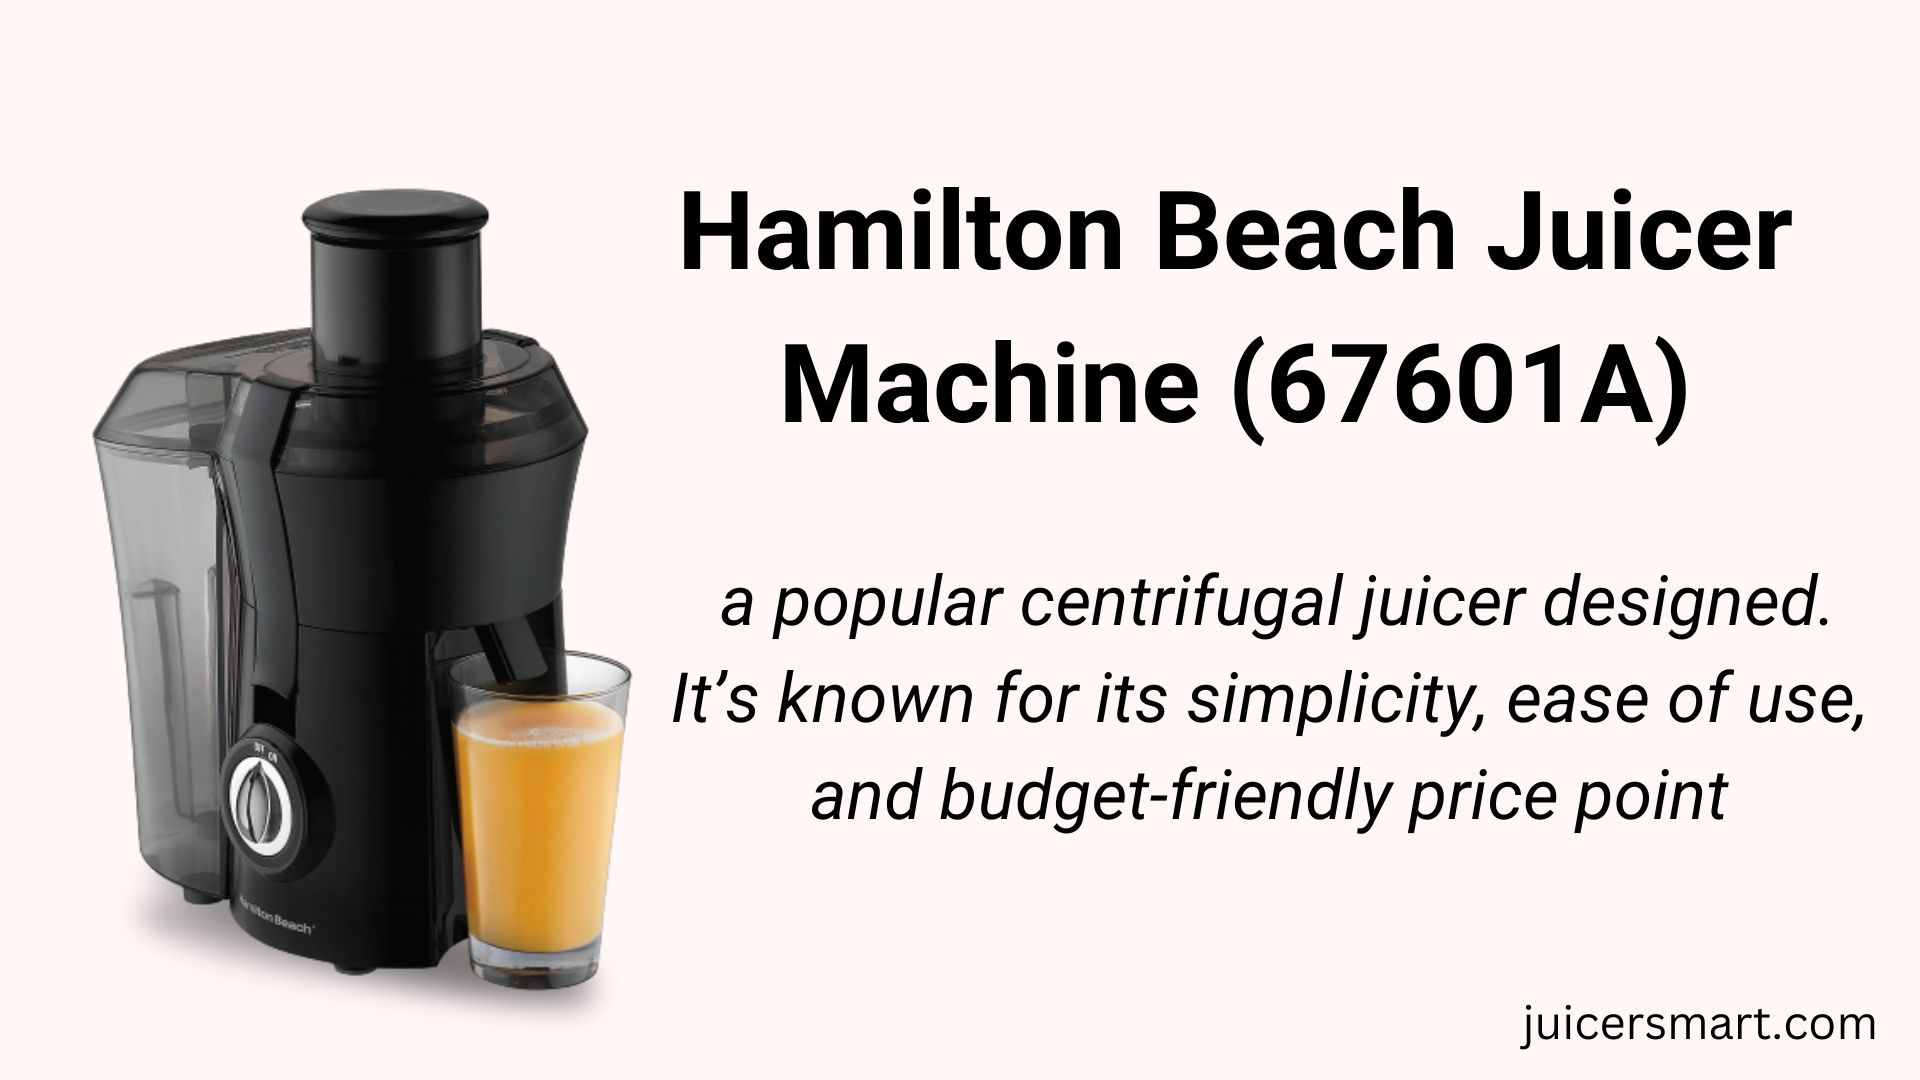 Hamilton Beach Juicer Machine